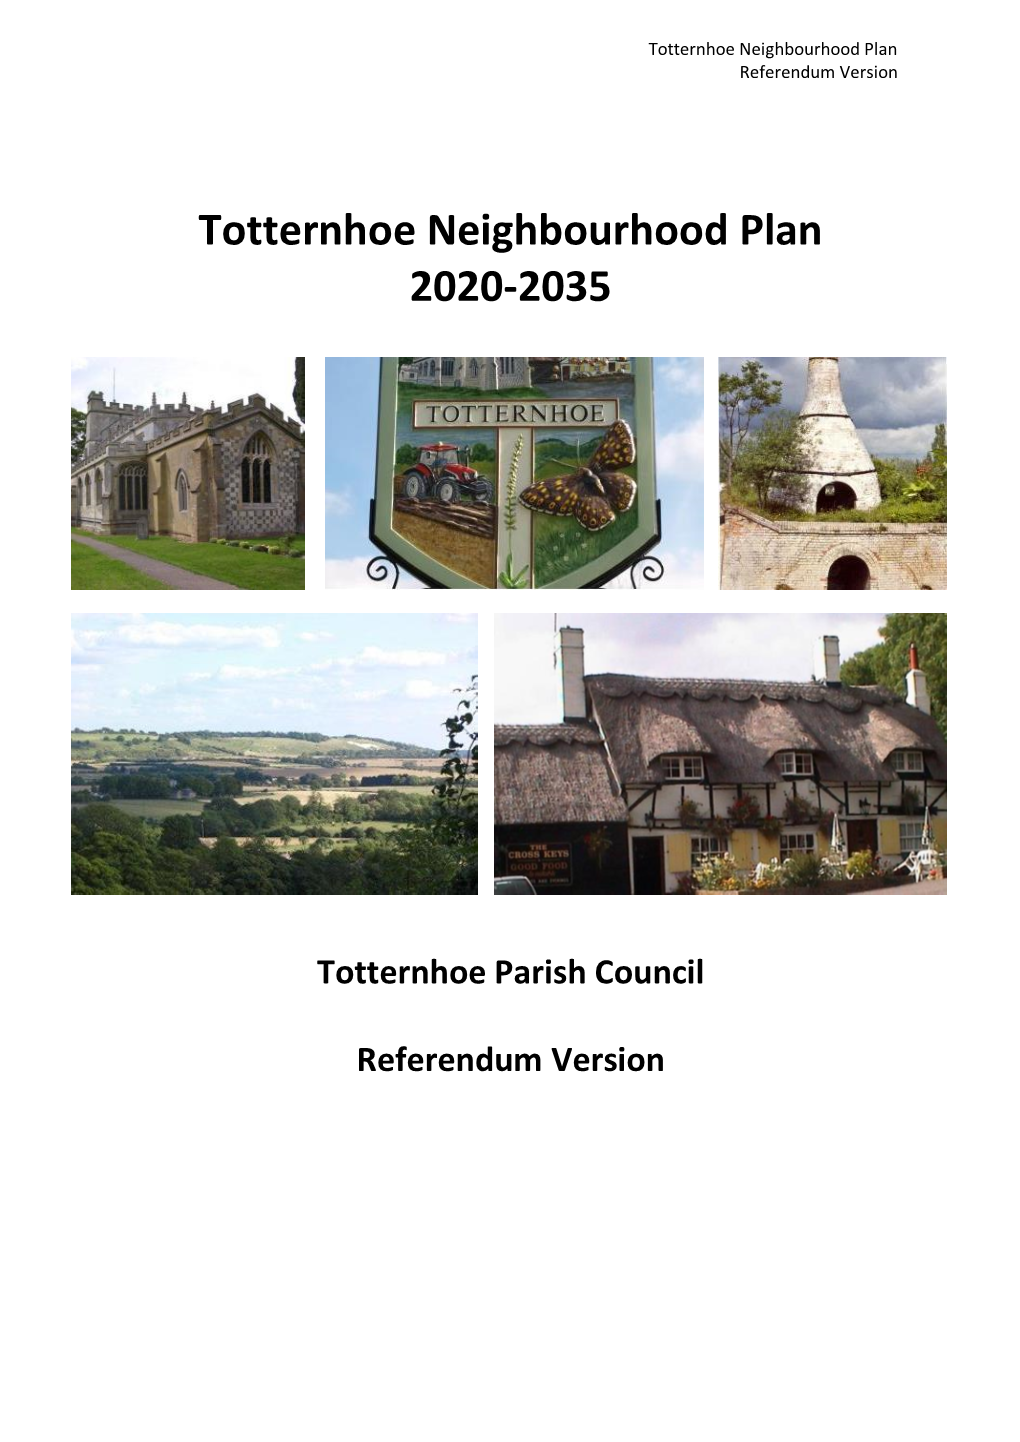 1. Totternhoe Neighbourhood Plan (Referendum Version)